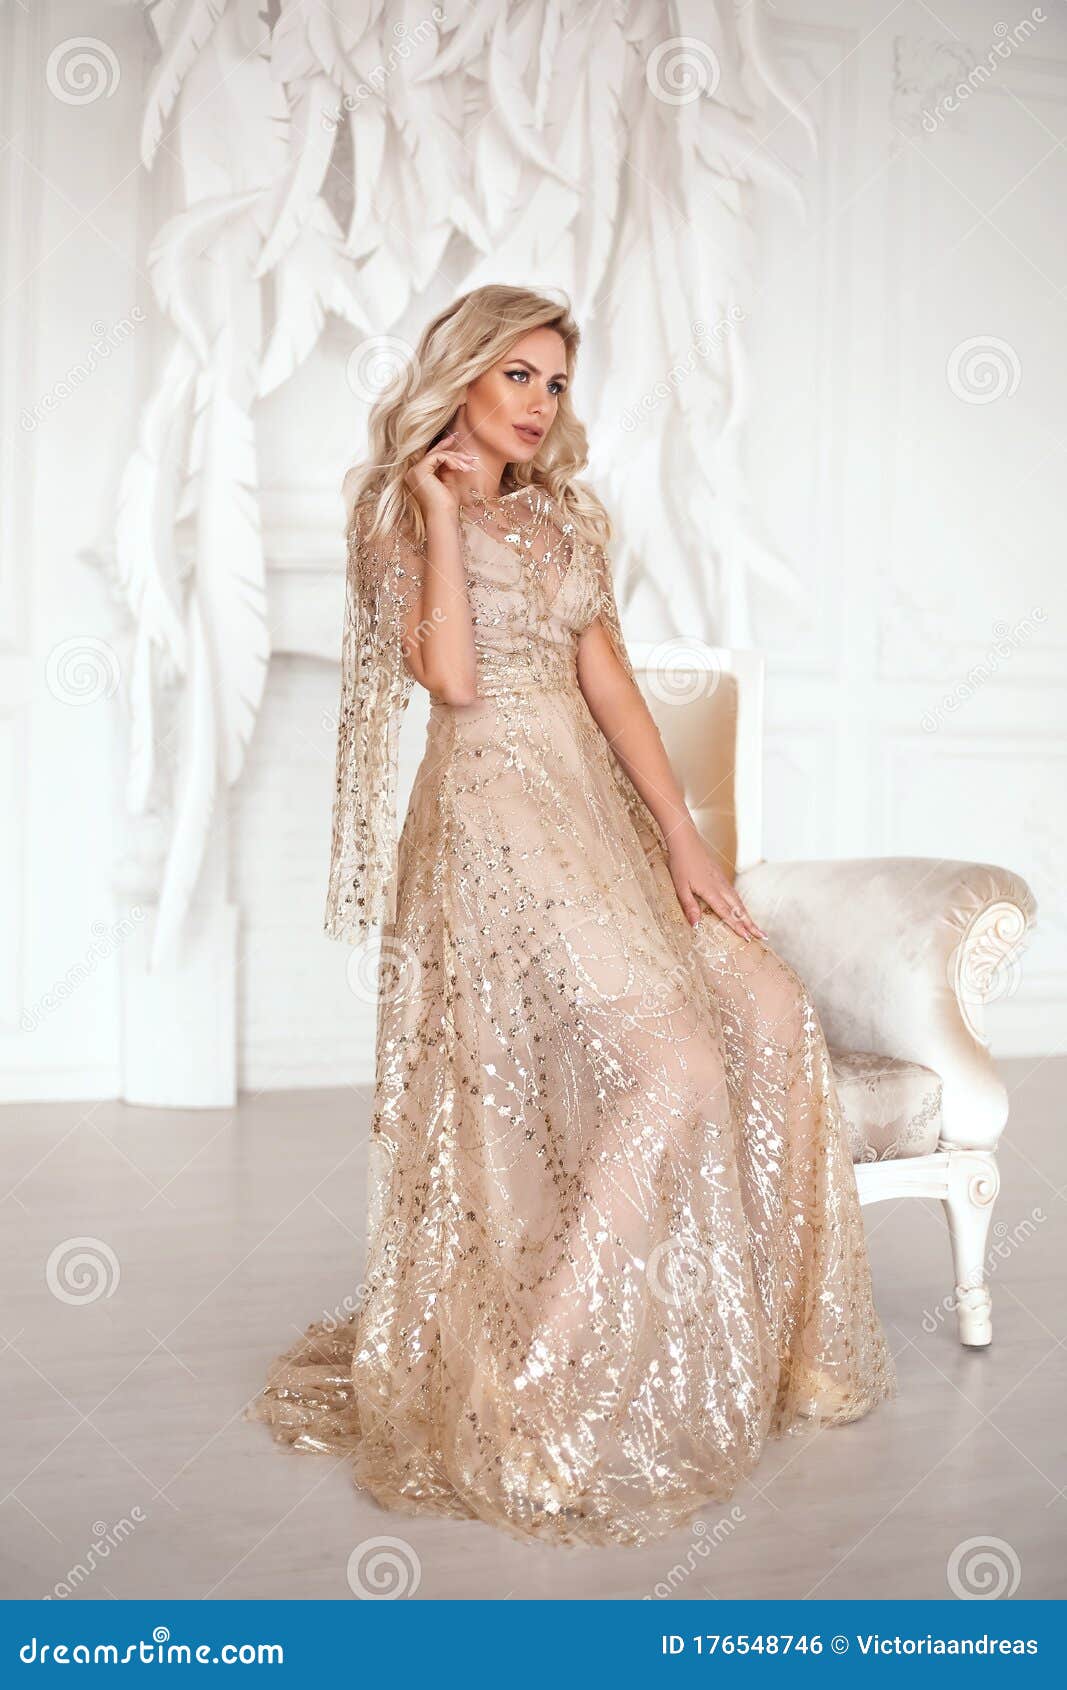 Amazing Luxury Elegant Woman in Stylish Golden Party Dress Posing before  White Feathers Wall. Fashion Beautiful Sensual Female Stock Photo - Image  of elegance, beauty: 176548746